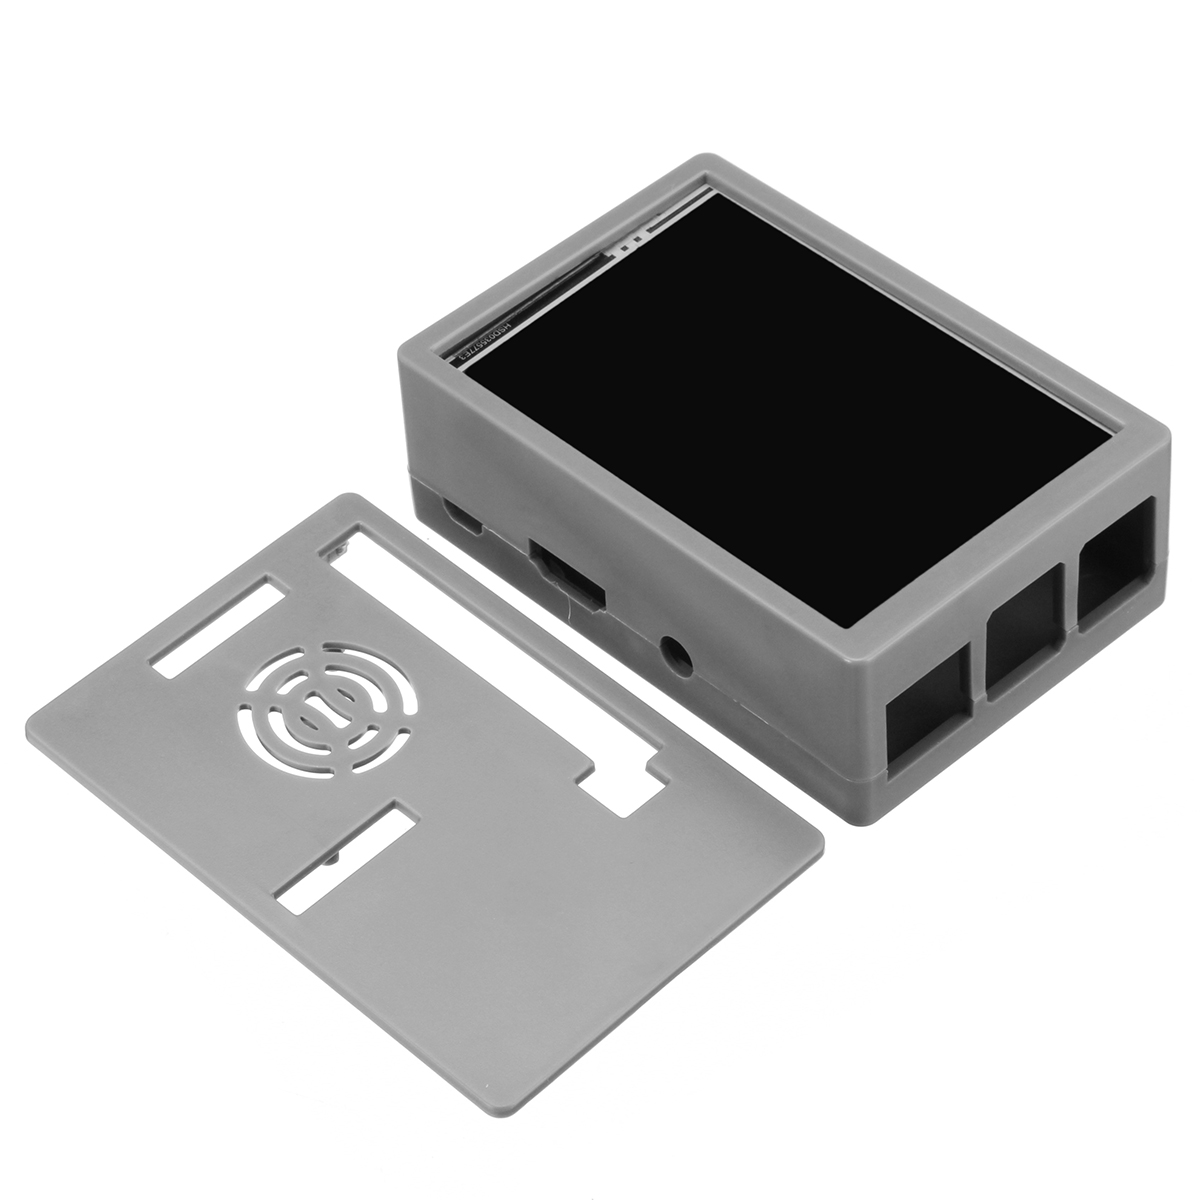 

3.5 Inch TFT Touch Screen LCD Display + Gray ABS Case For Raspberry Pi B+/2B/3B/3B+